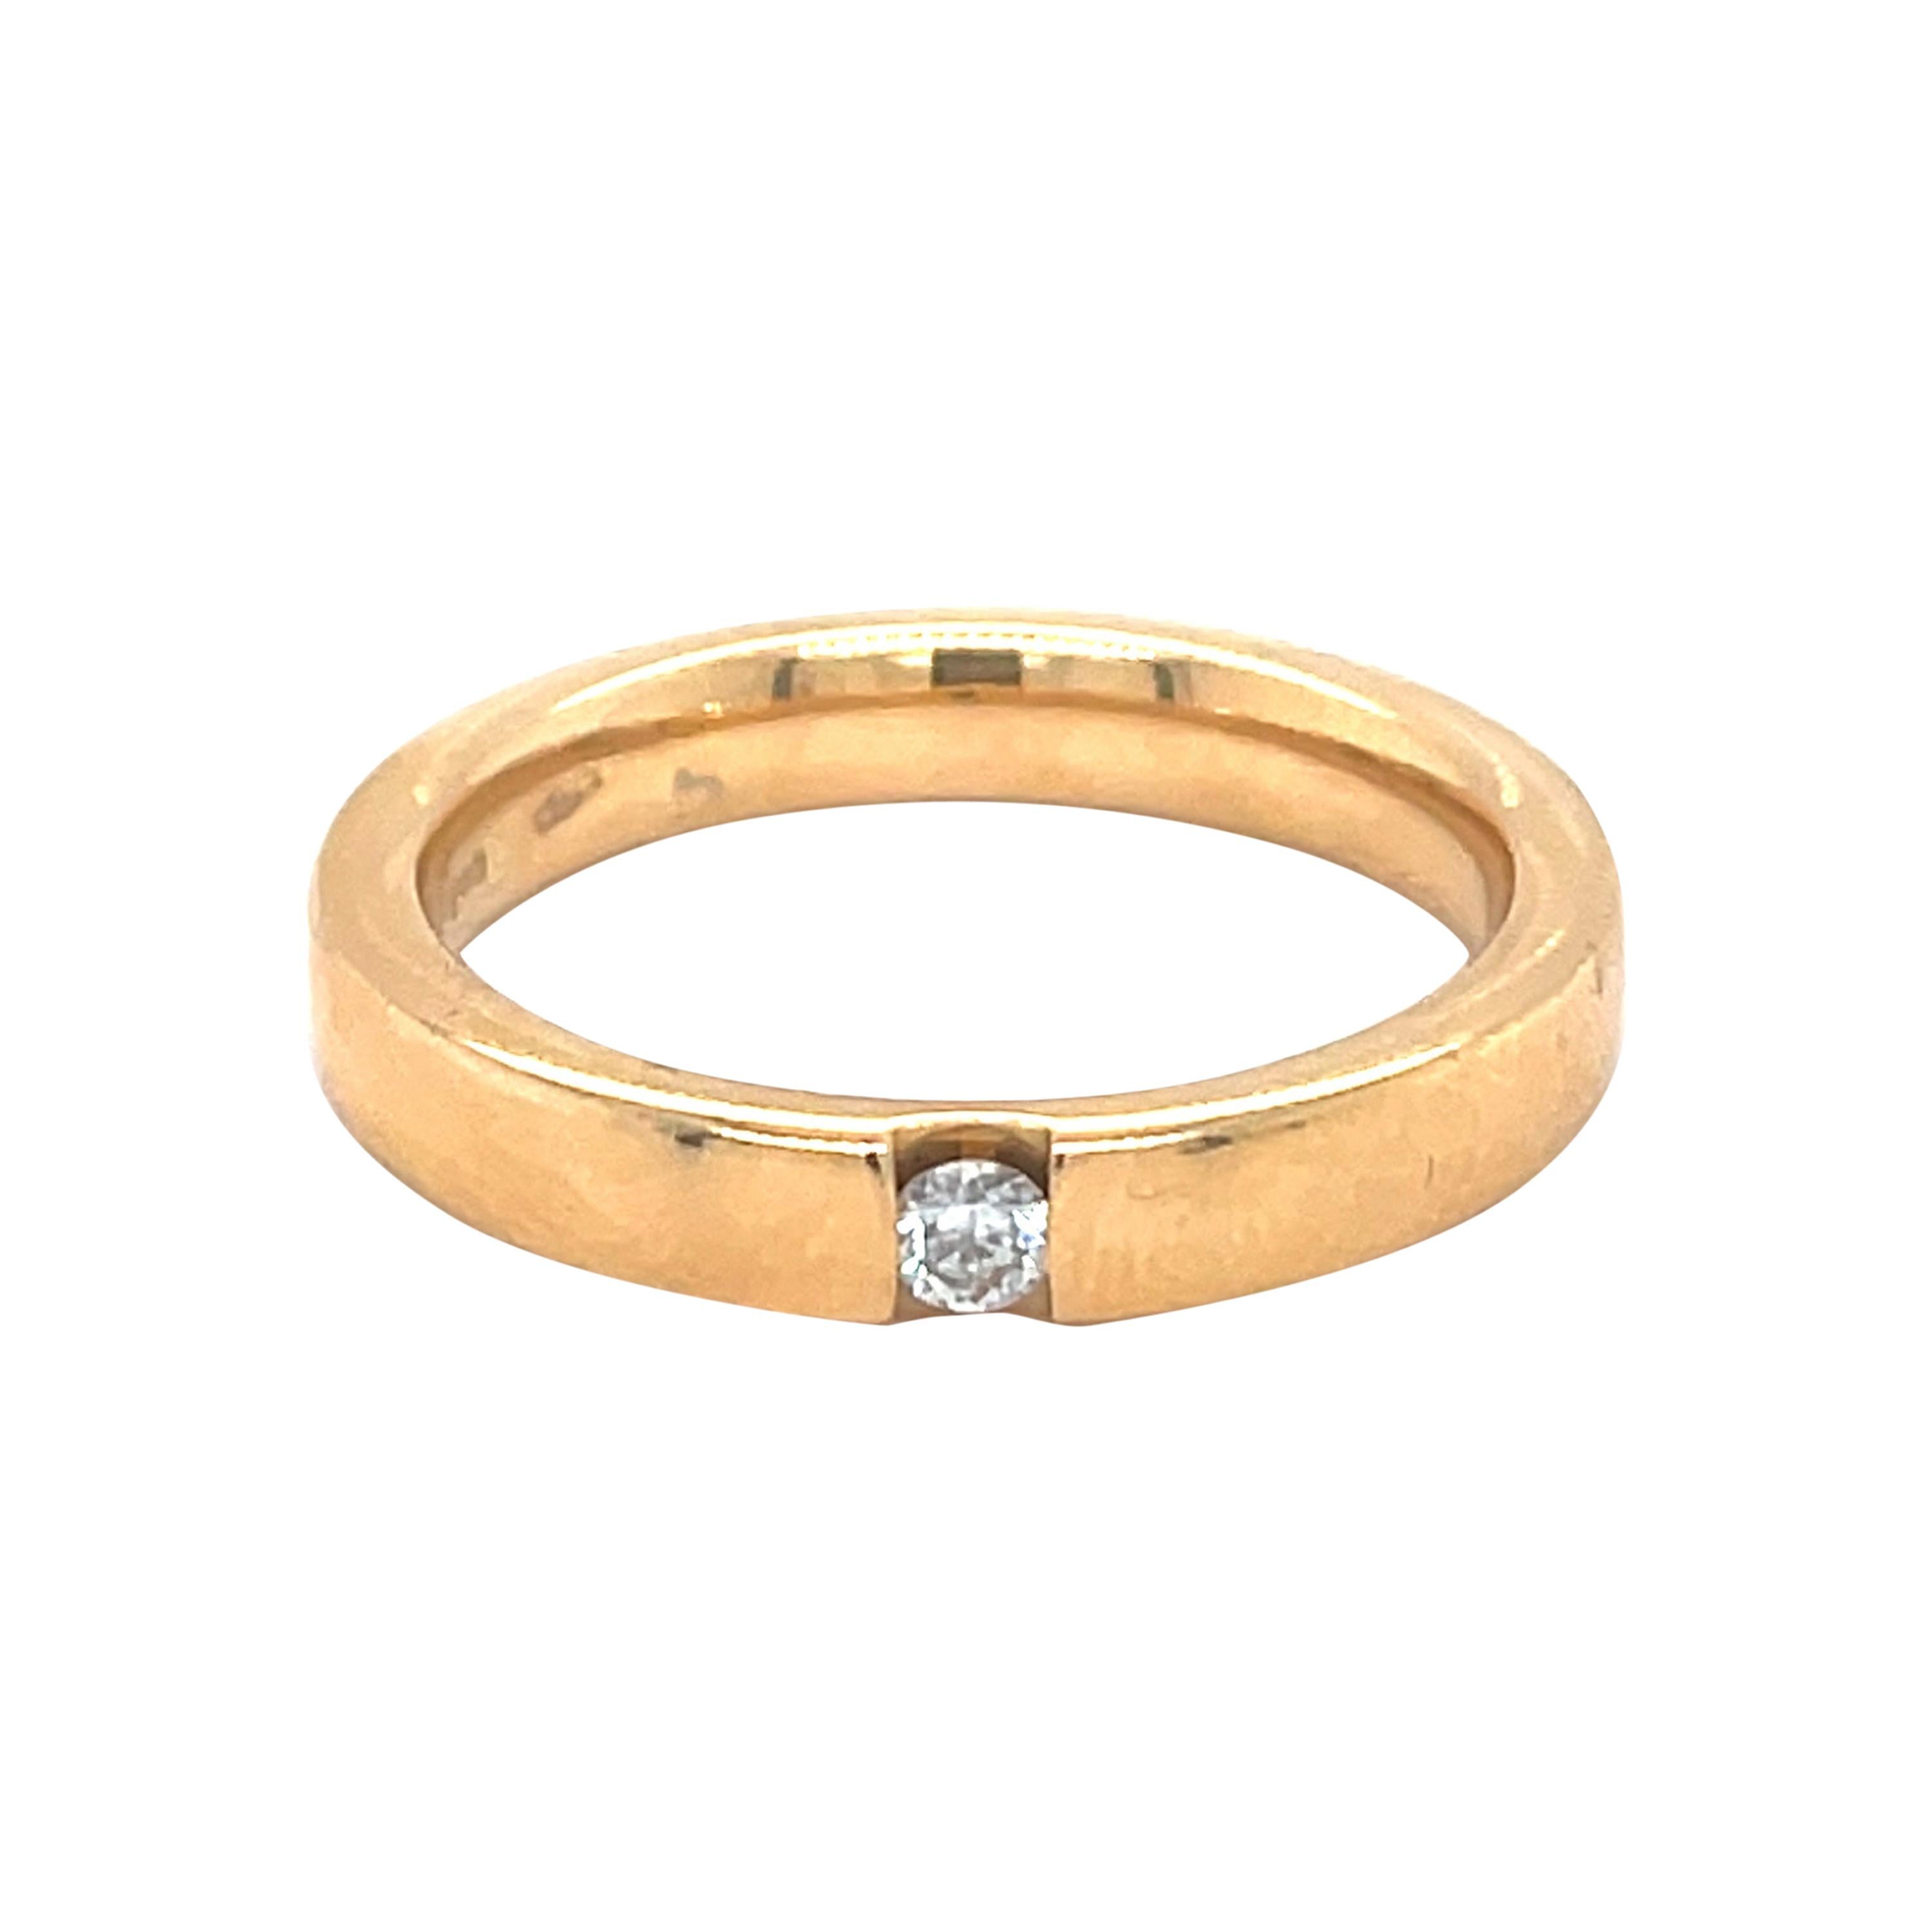 Vitale 1913 18 Karat Yellow Gold Diamond Band Ring